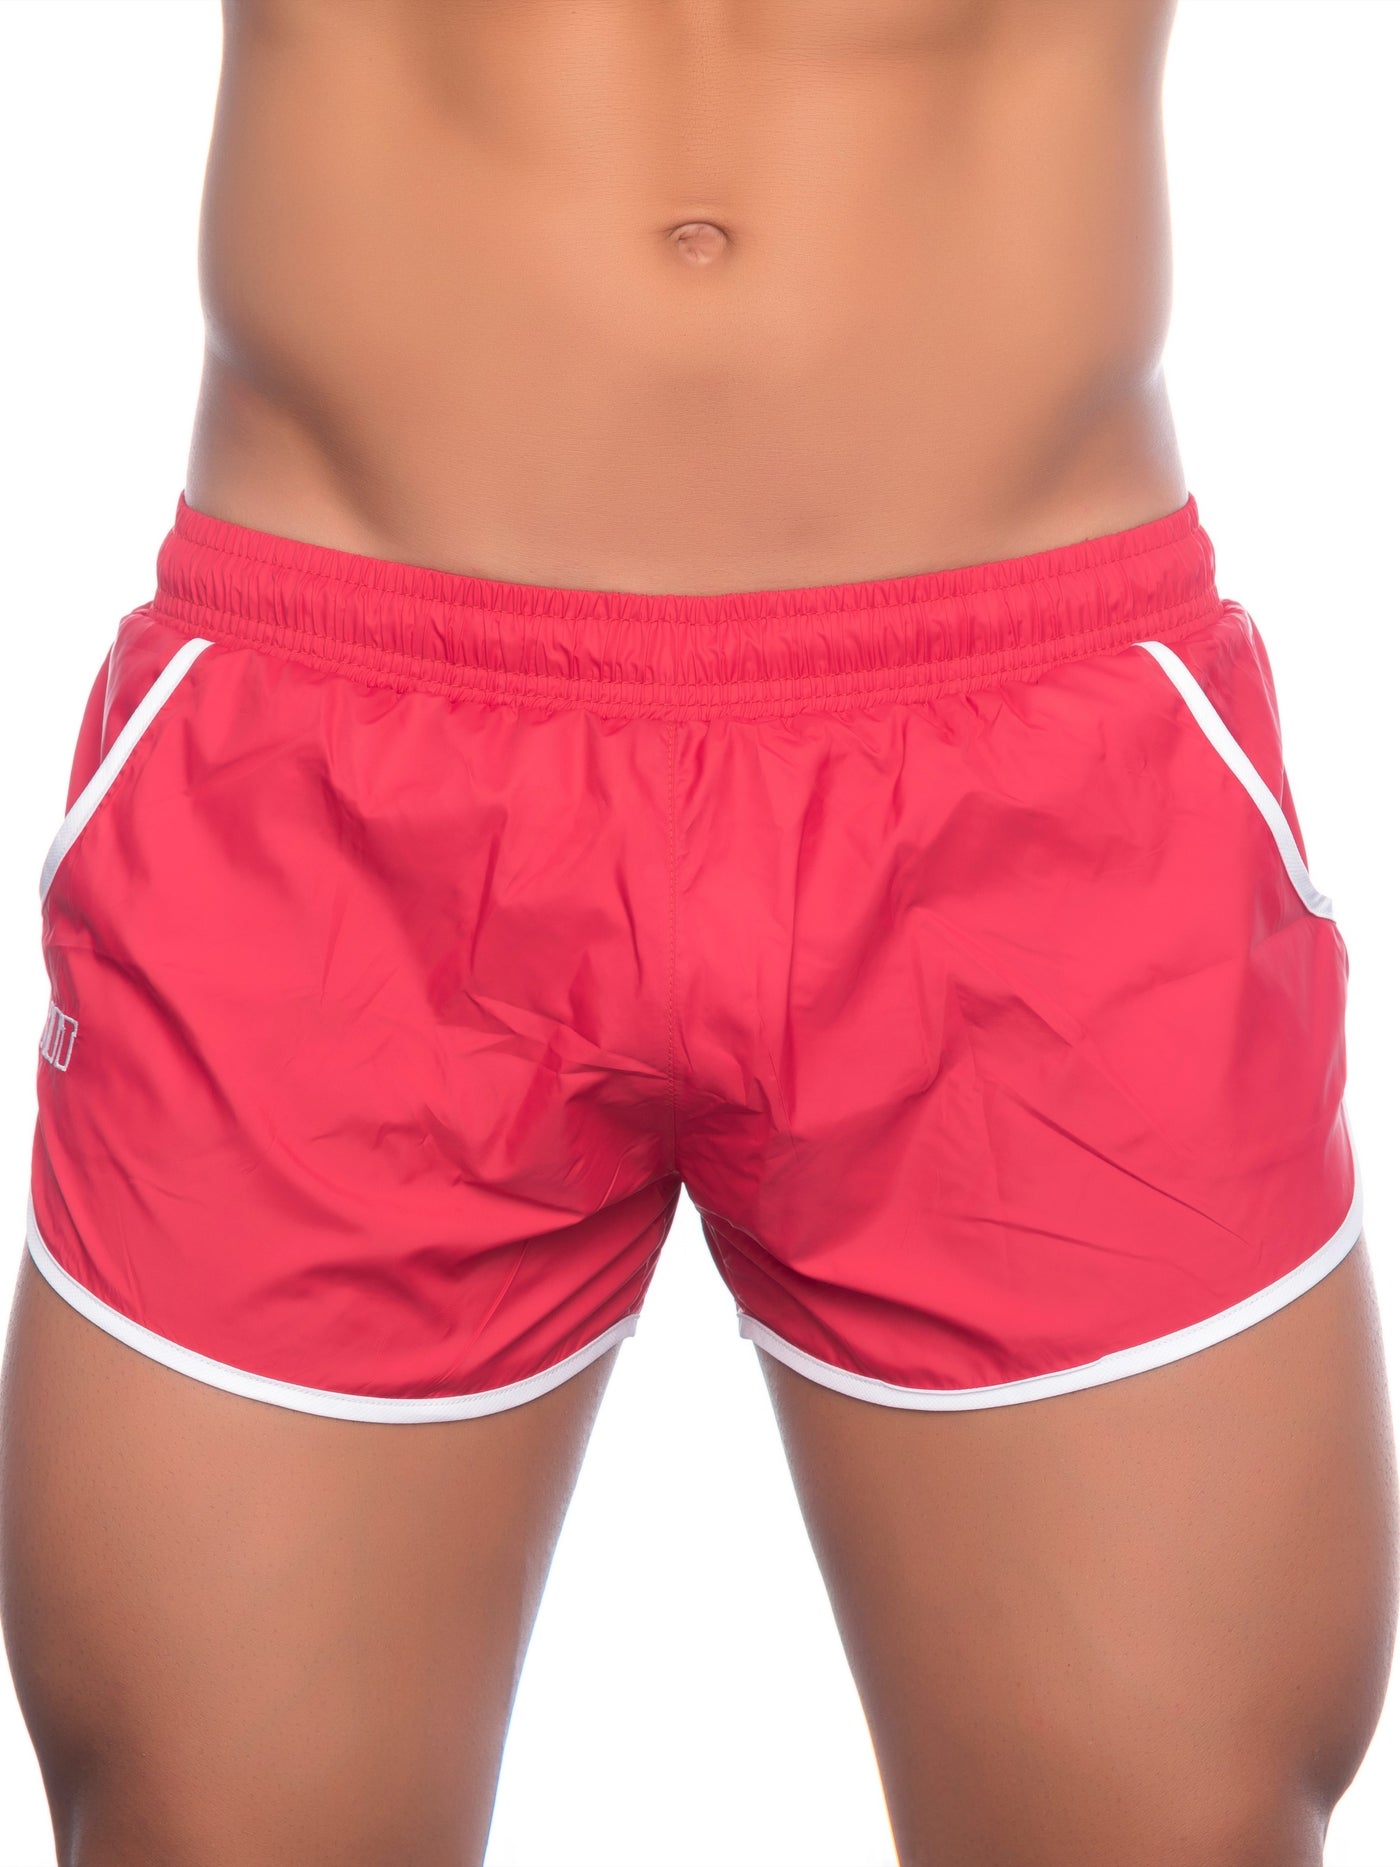 NIT Fox Castor Swim Shorts Mens Swimwear Short Shorts Red - Activemen Clothing